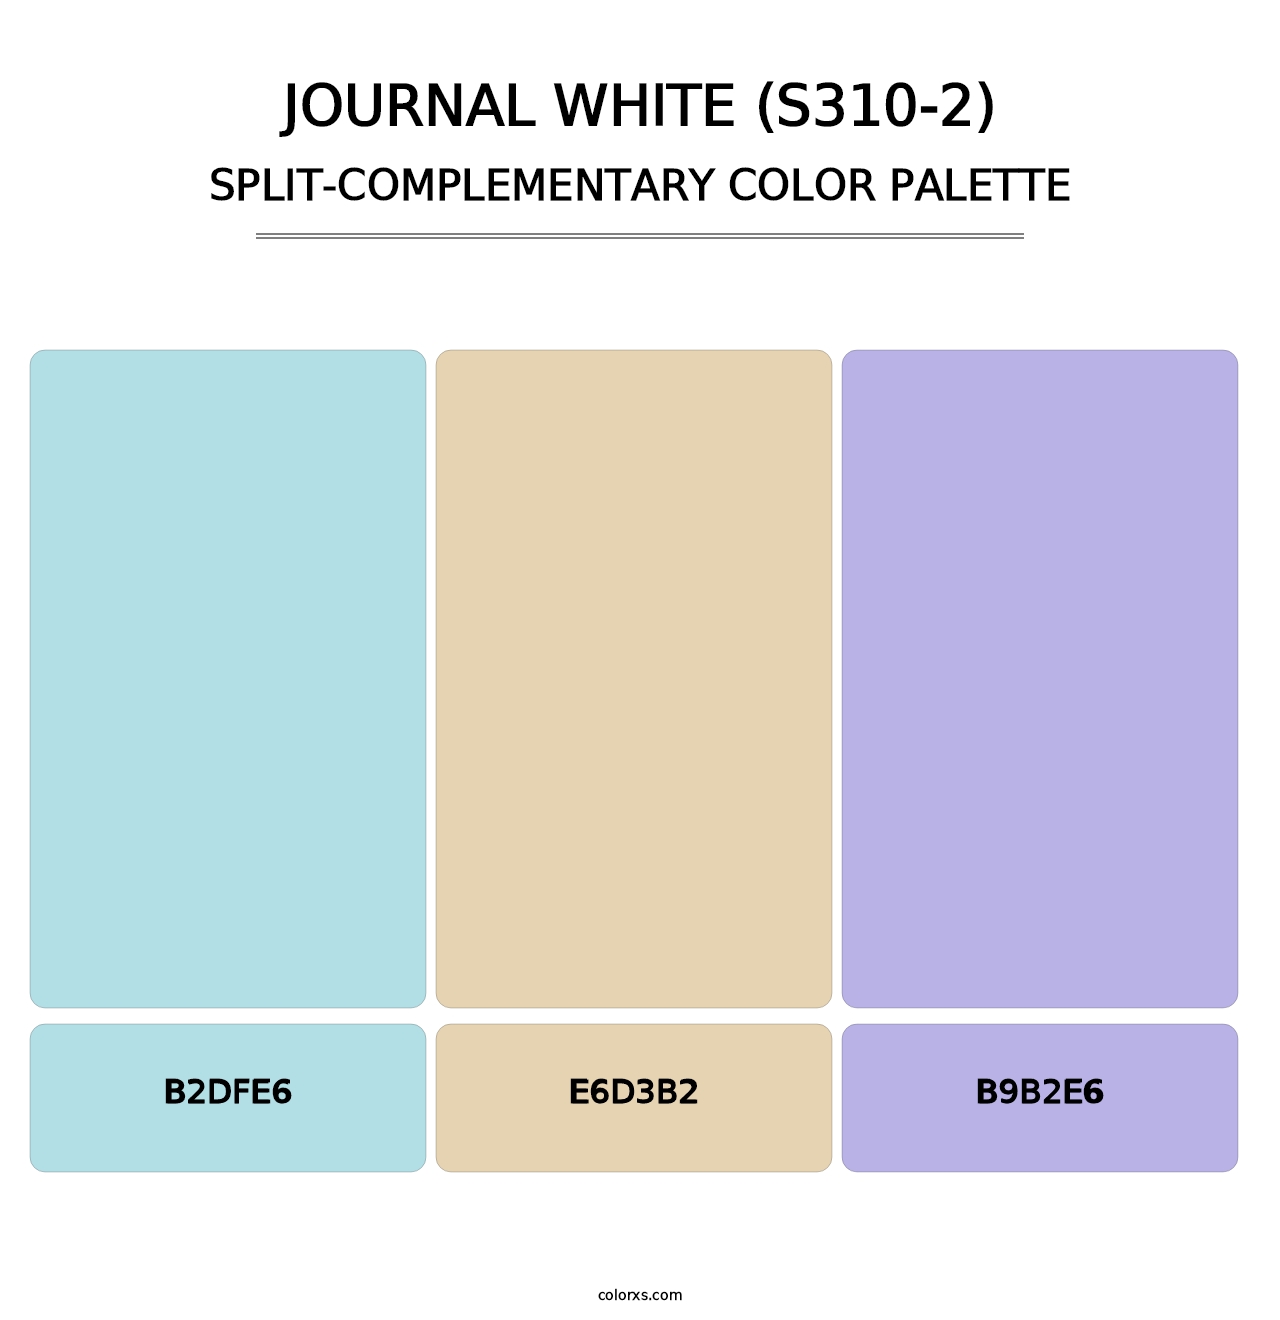 Journal White (S310-2) - Split-Complementary Color Palette